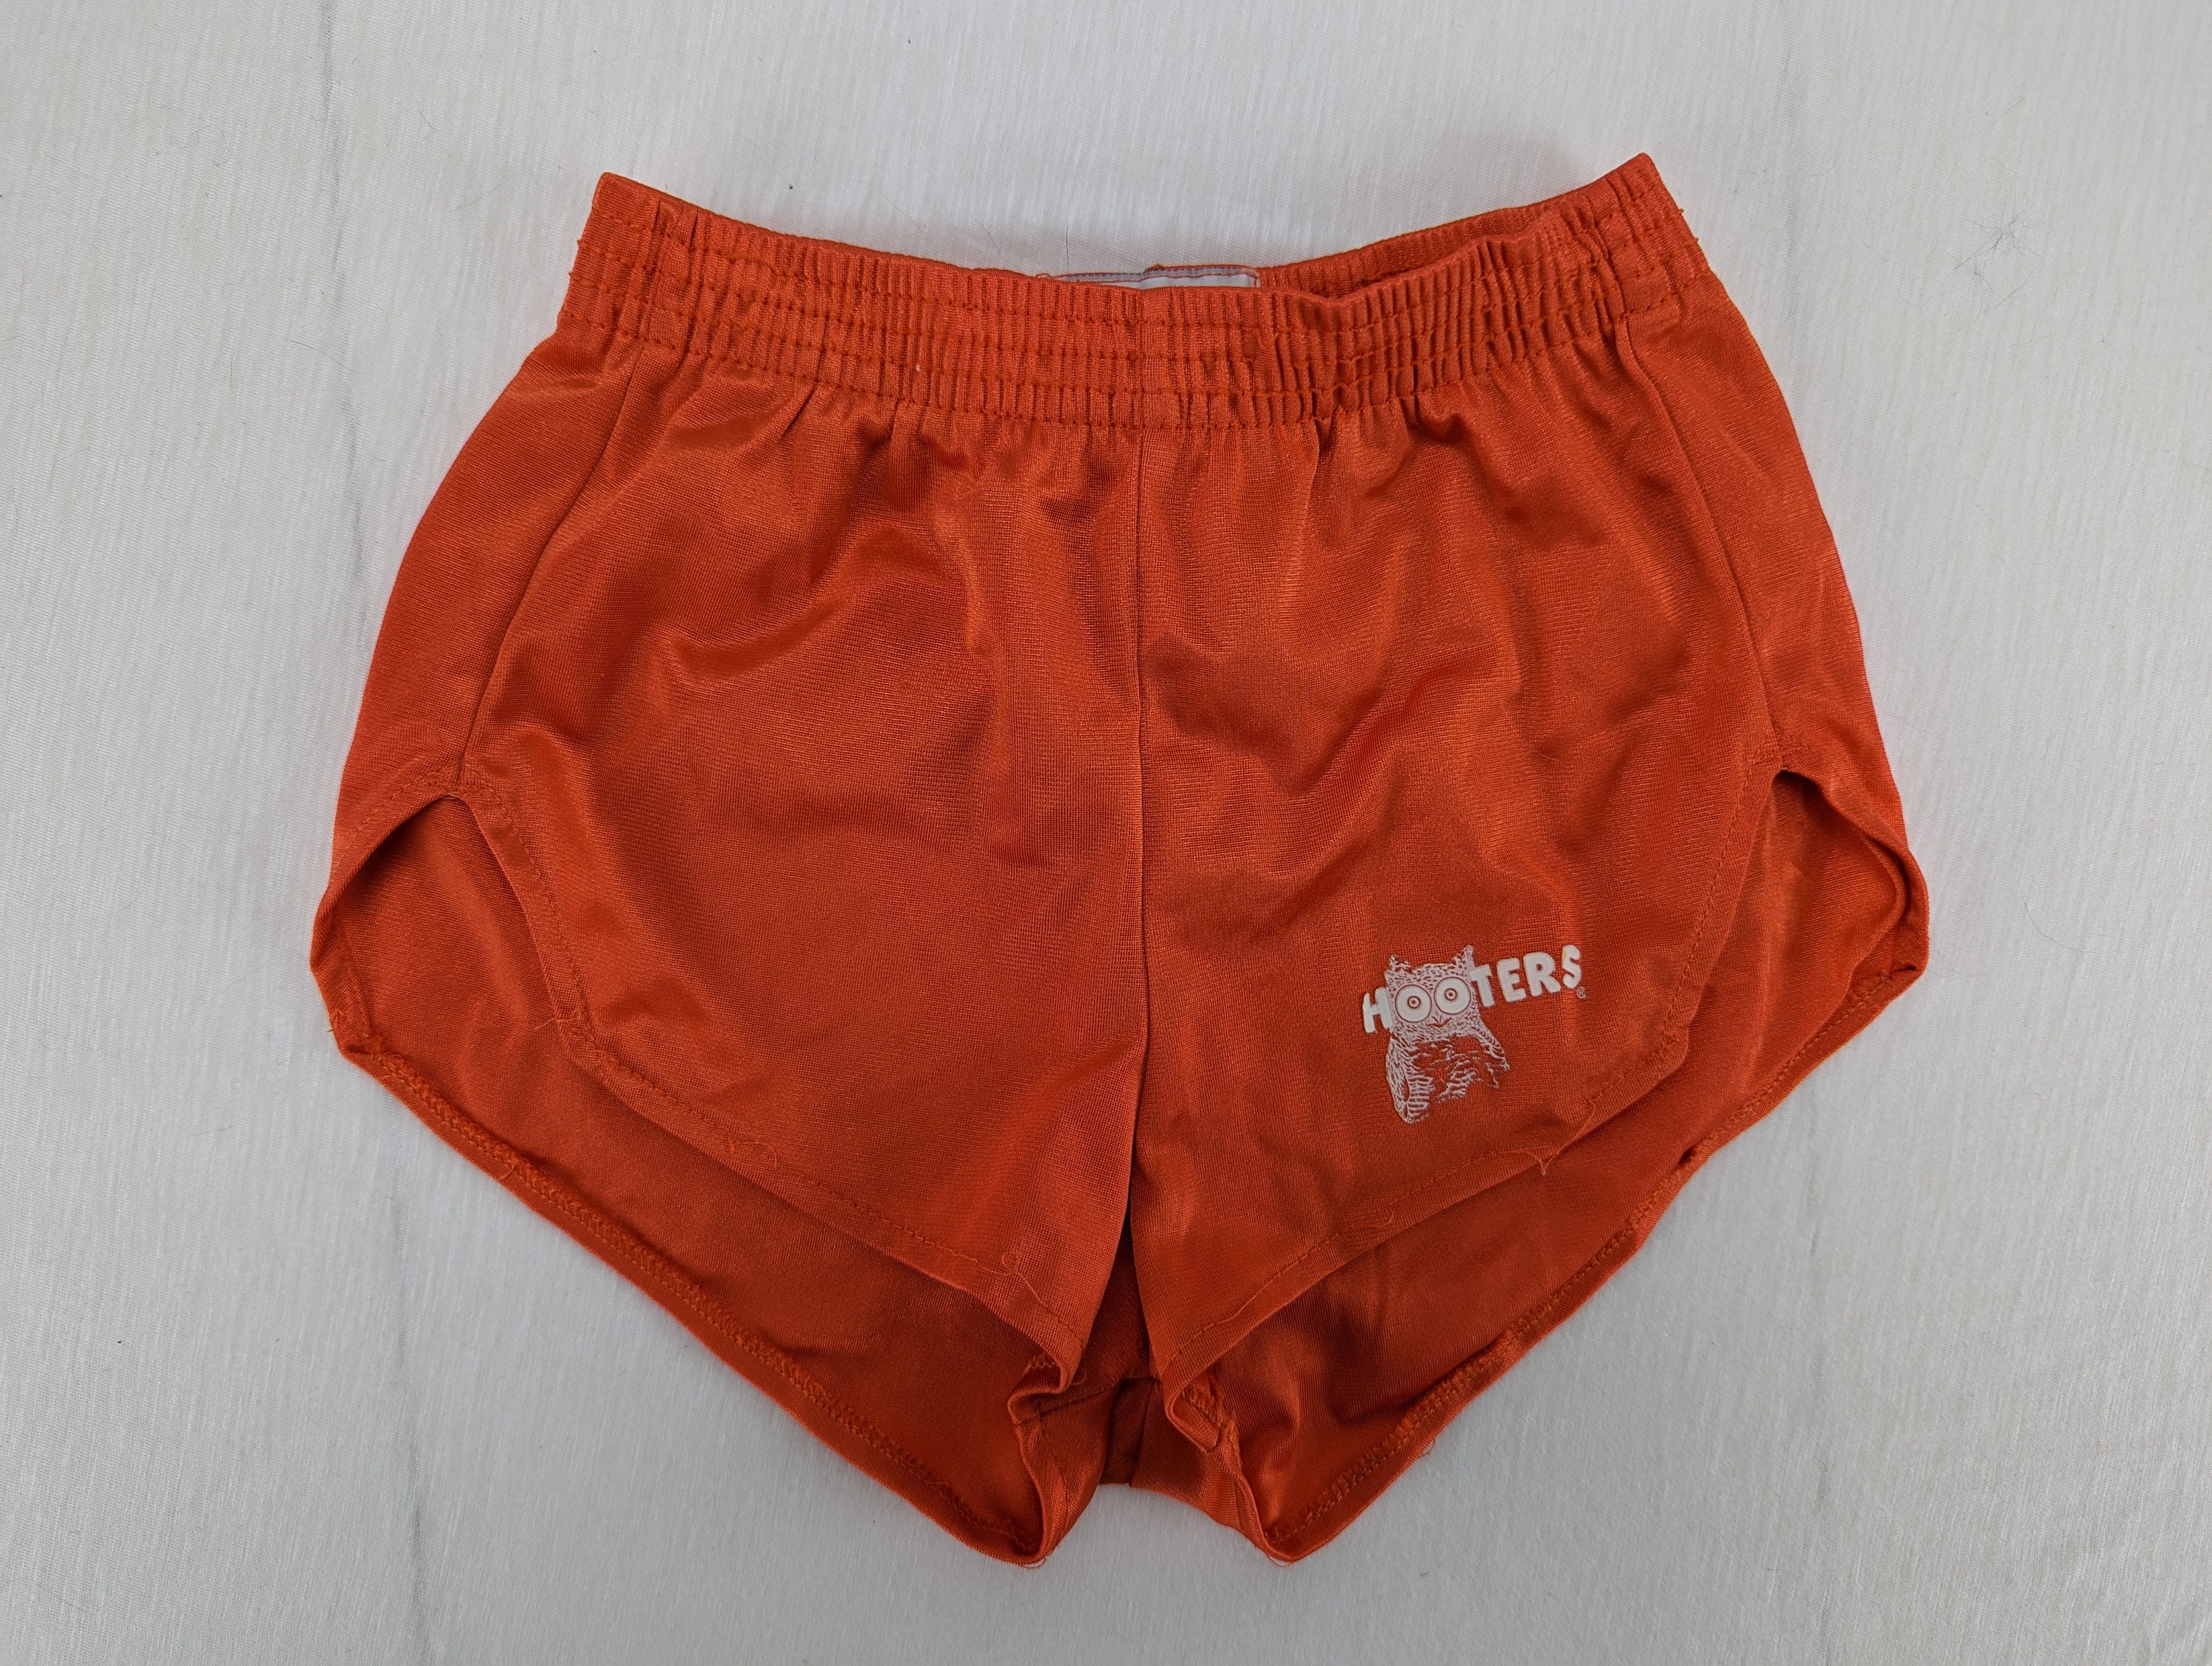 Vintage Nylon Hooters Shorts Orange 3XS Booty USA Women's Retro